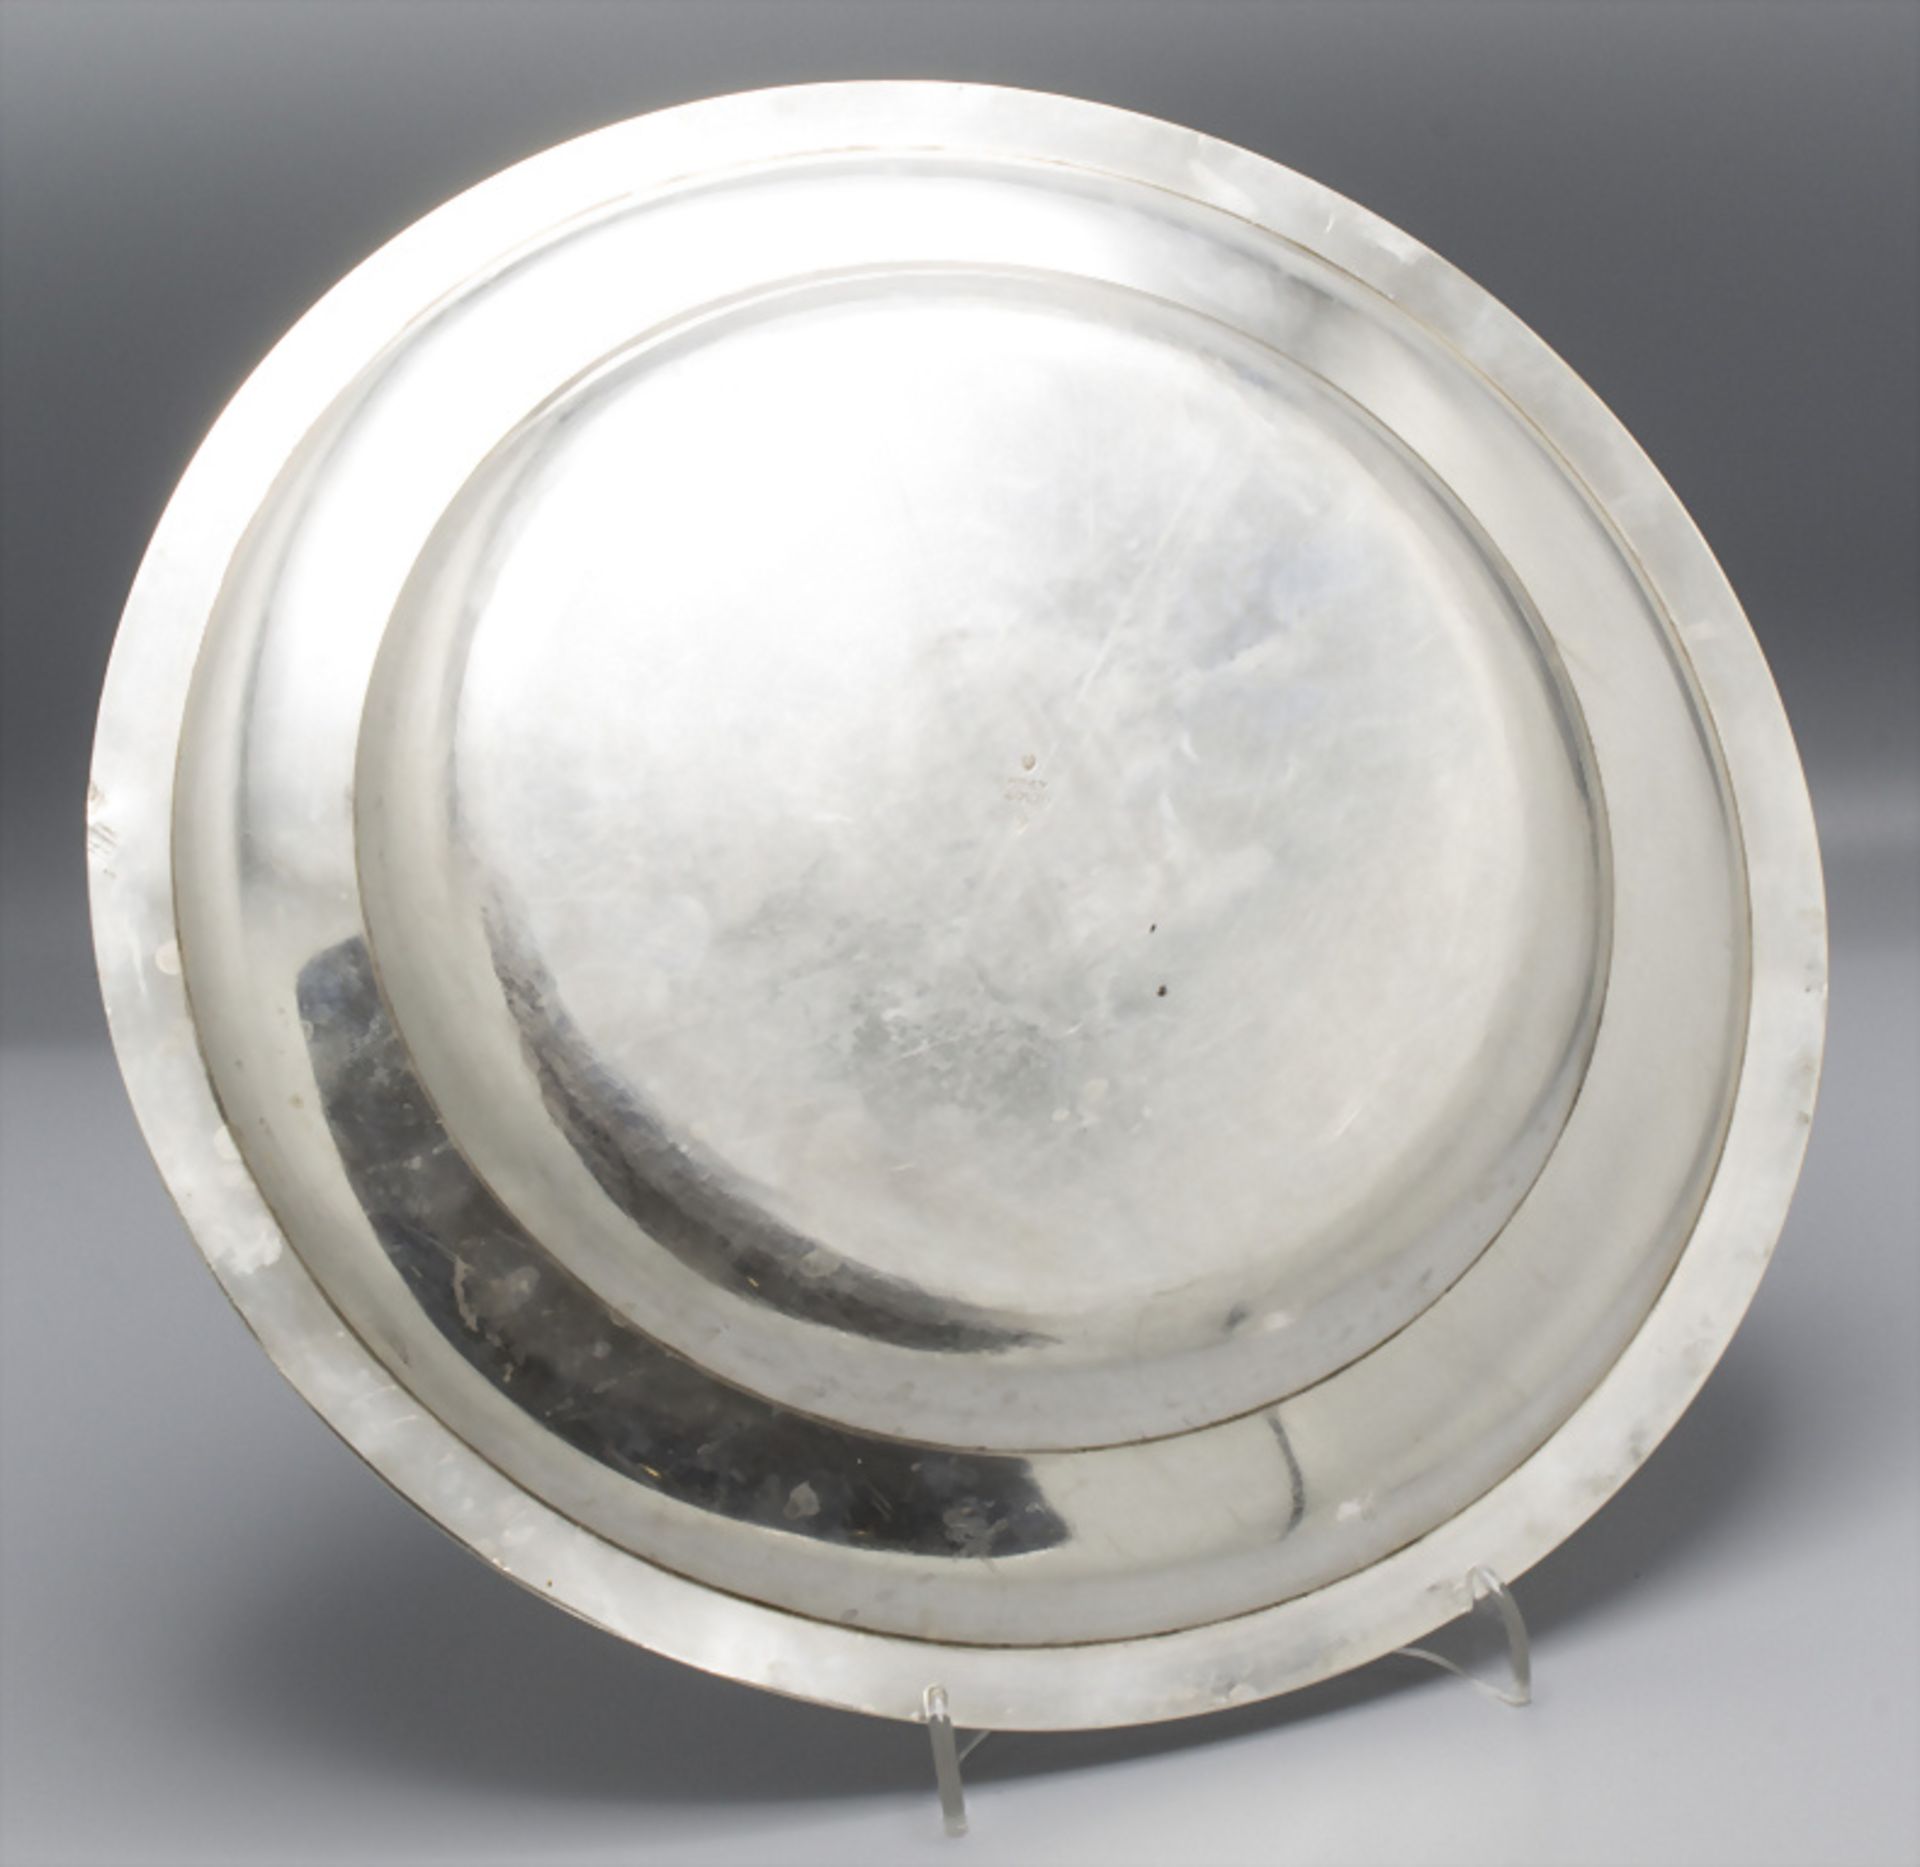 12 Silberteller / 12 assiettes en argent massif / A set of 12 silver plates, Odiot, Paris, um 1870 - Image 27 of 29